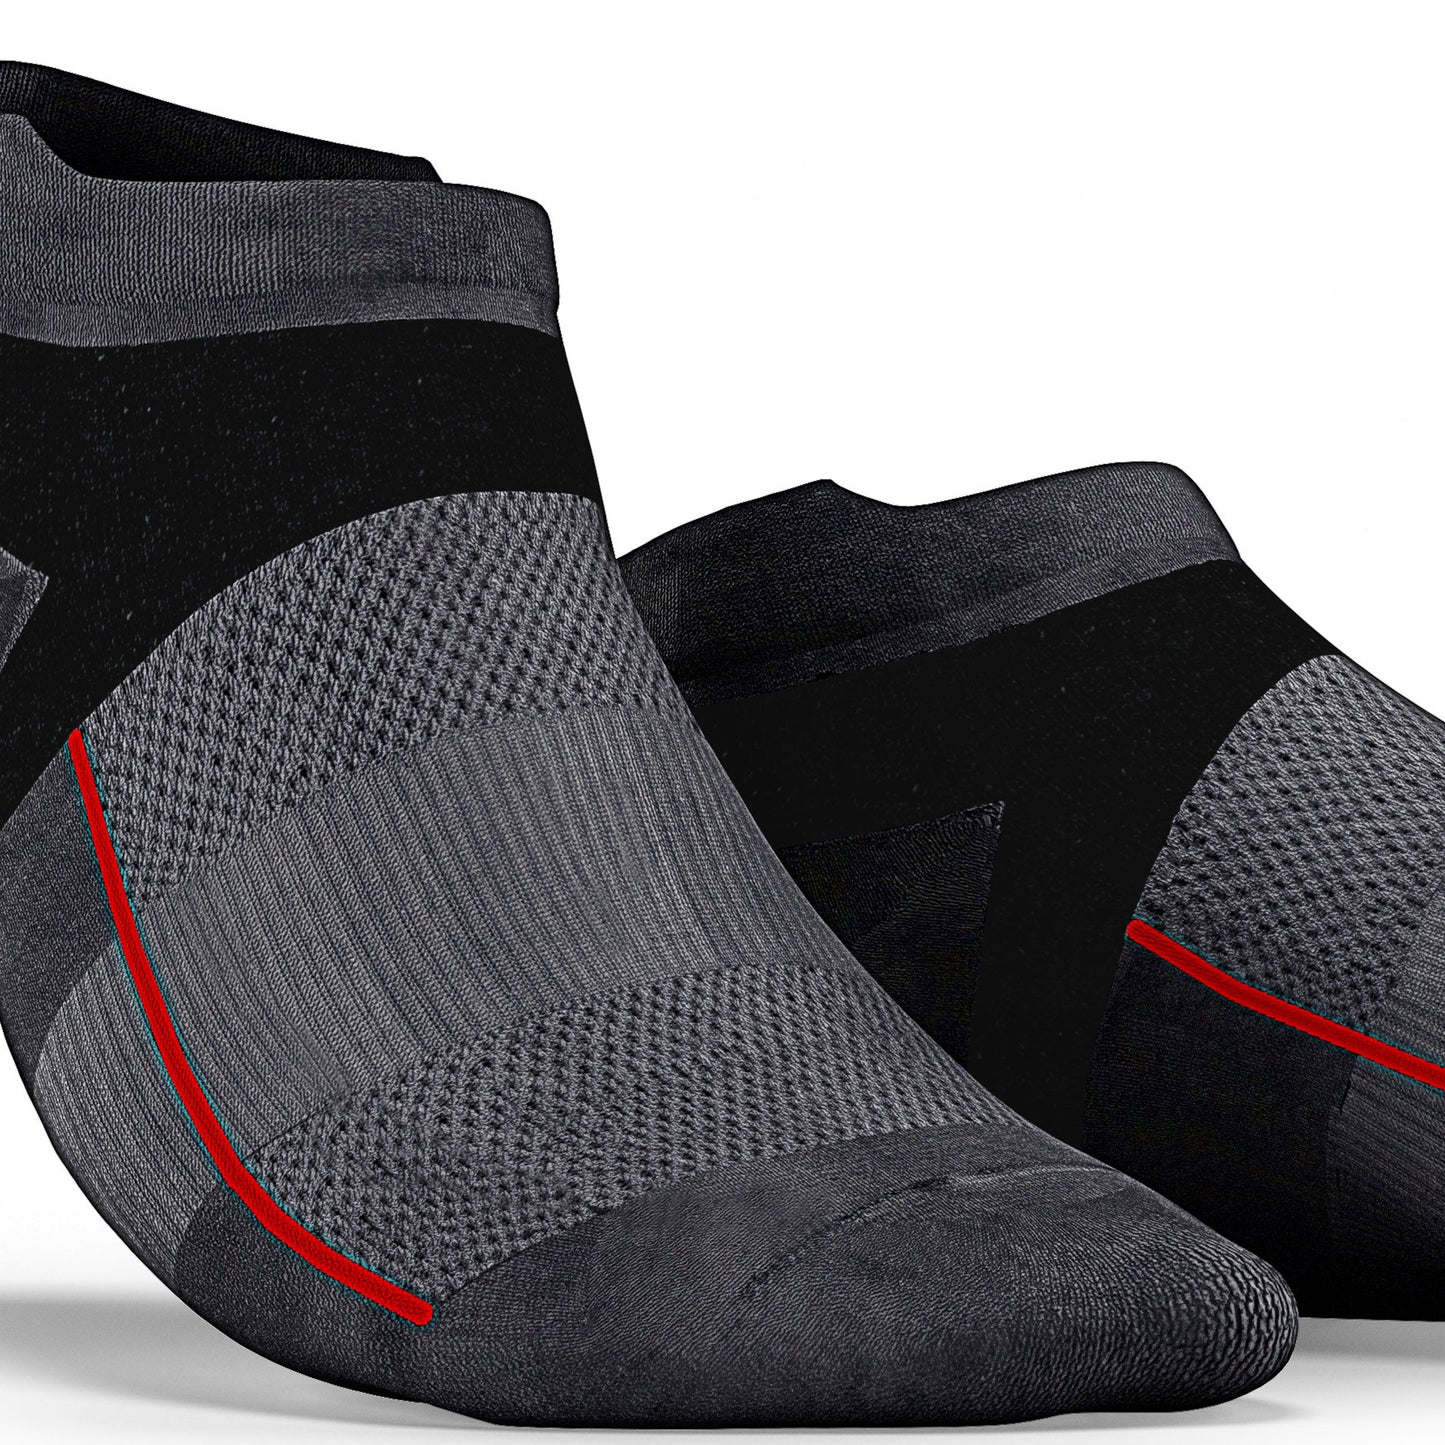 Charcoal Grey No Show Tab Cushioned Performance Socks - Unisex